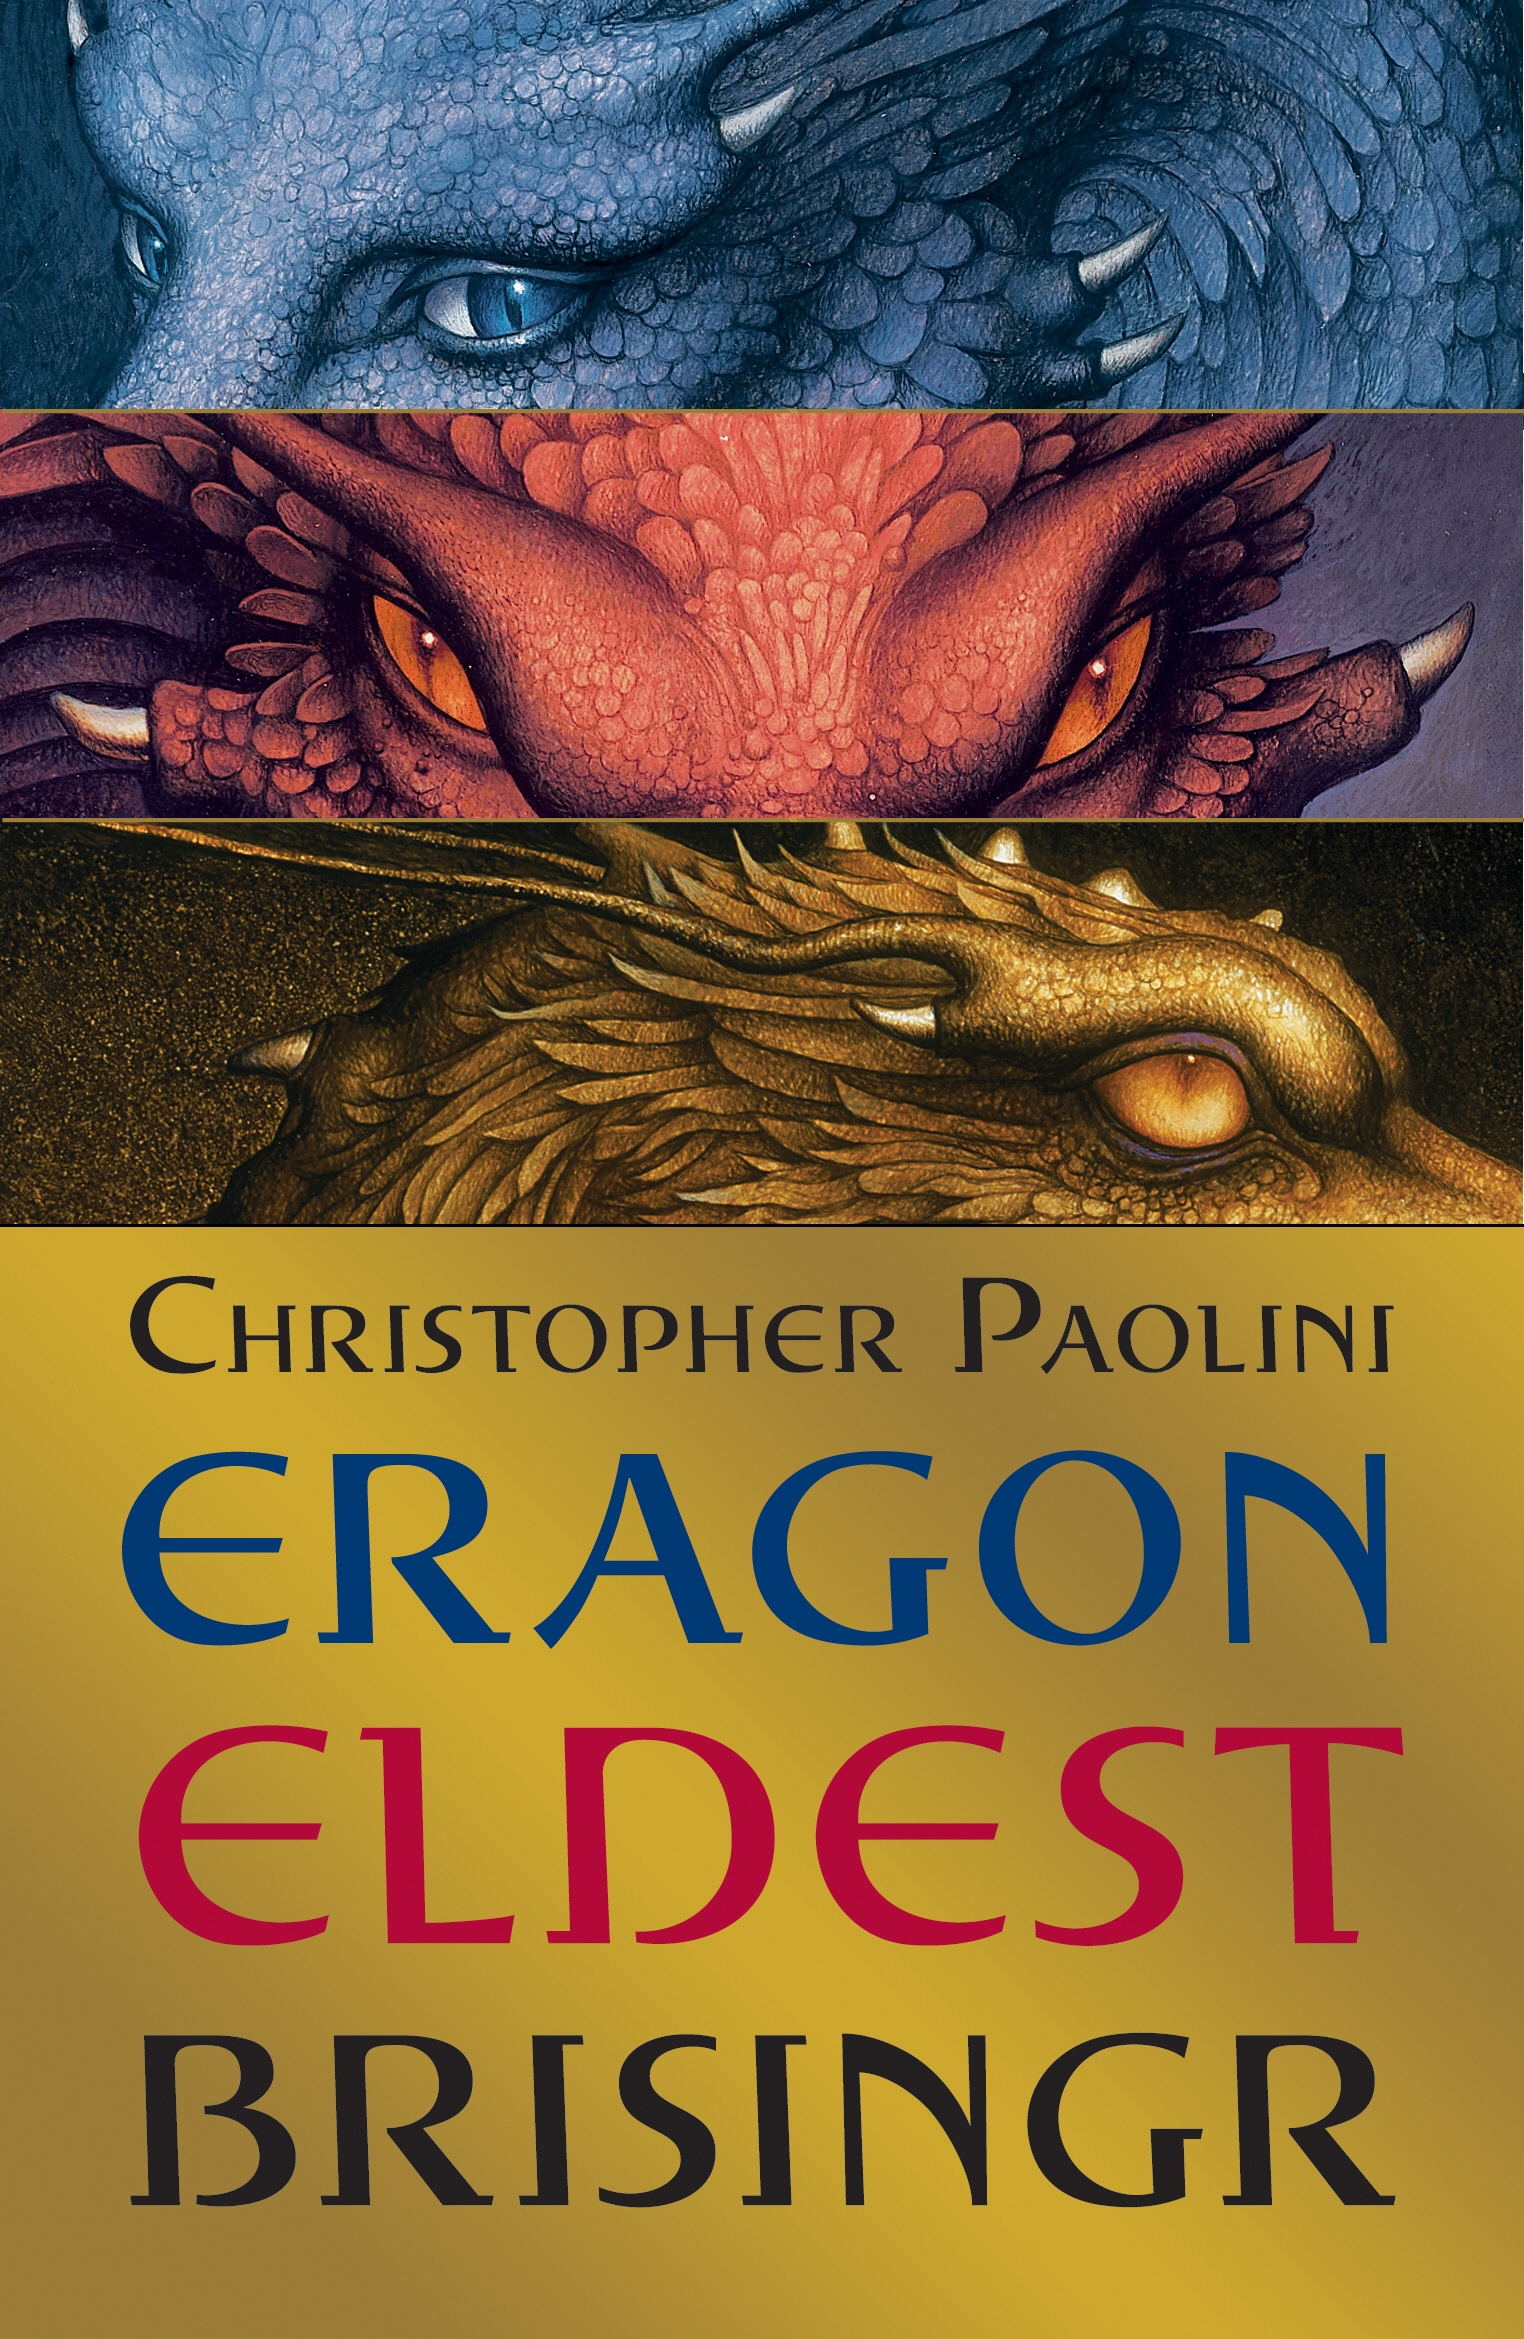 Eragon, Eldest & Brisingr by Christopher Paolini